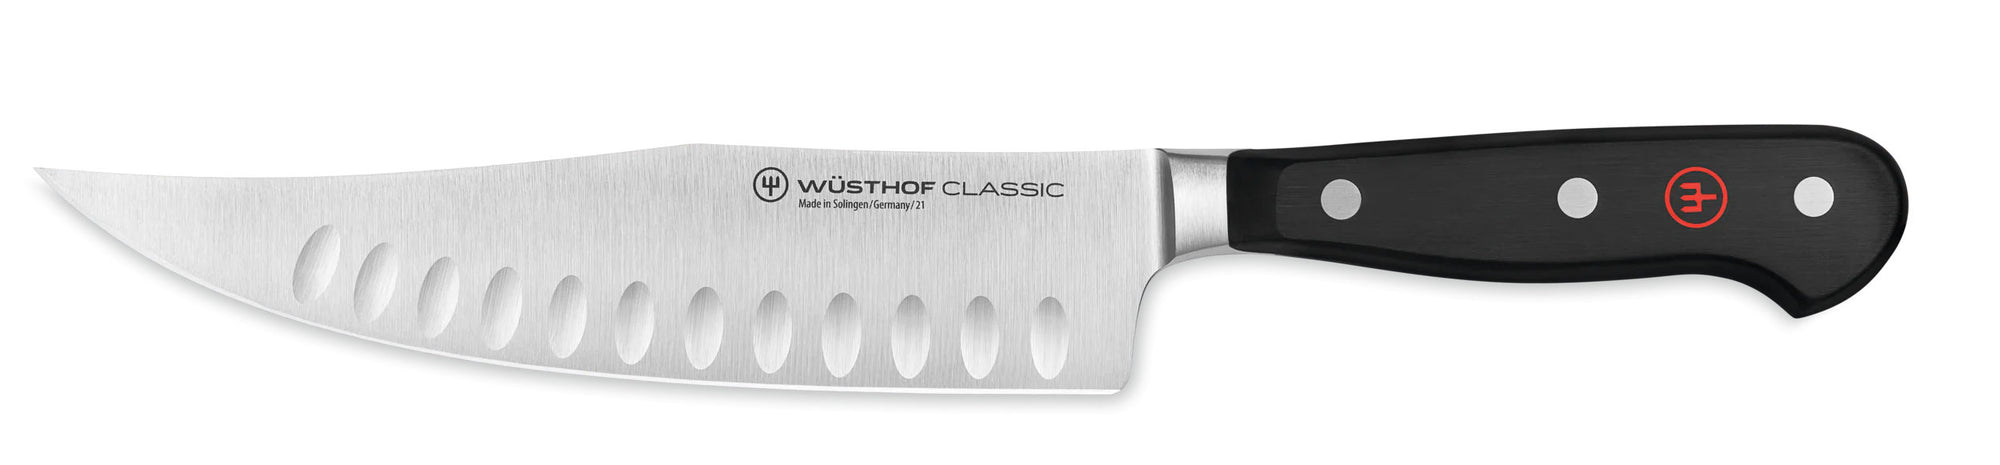 Wusthof Classic Hollow Edge Craftsman Knife, 6.7-inch (17 cm) - 1040134318